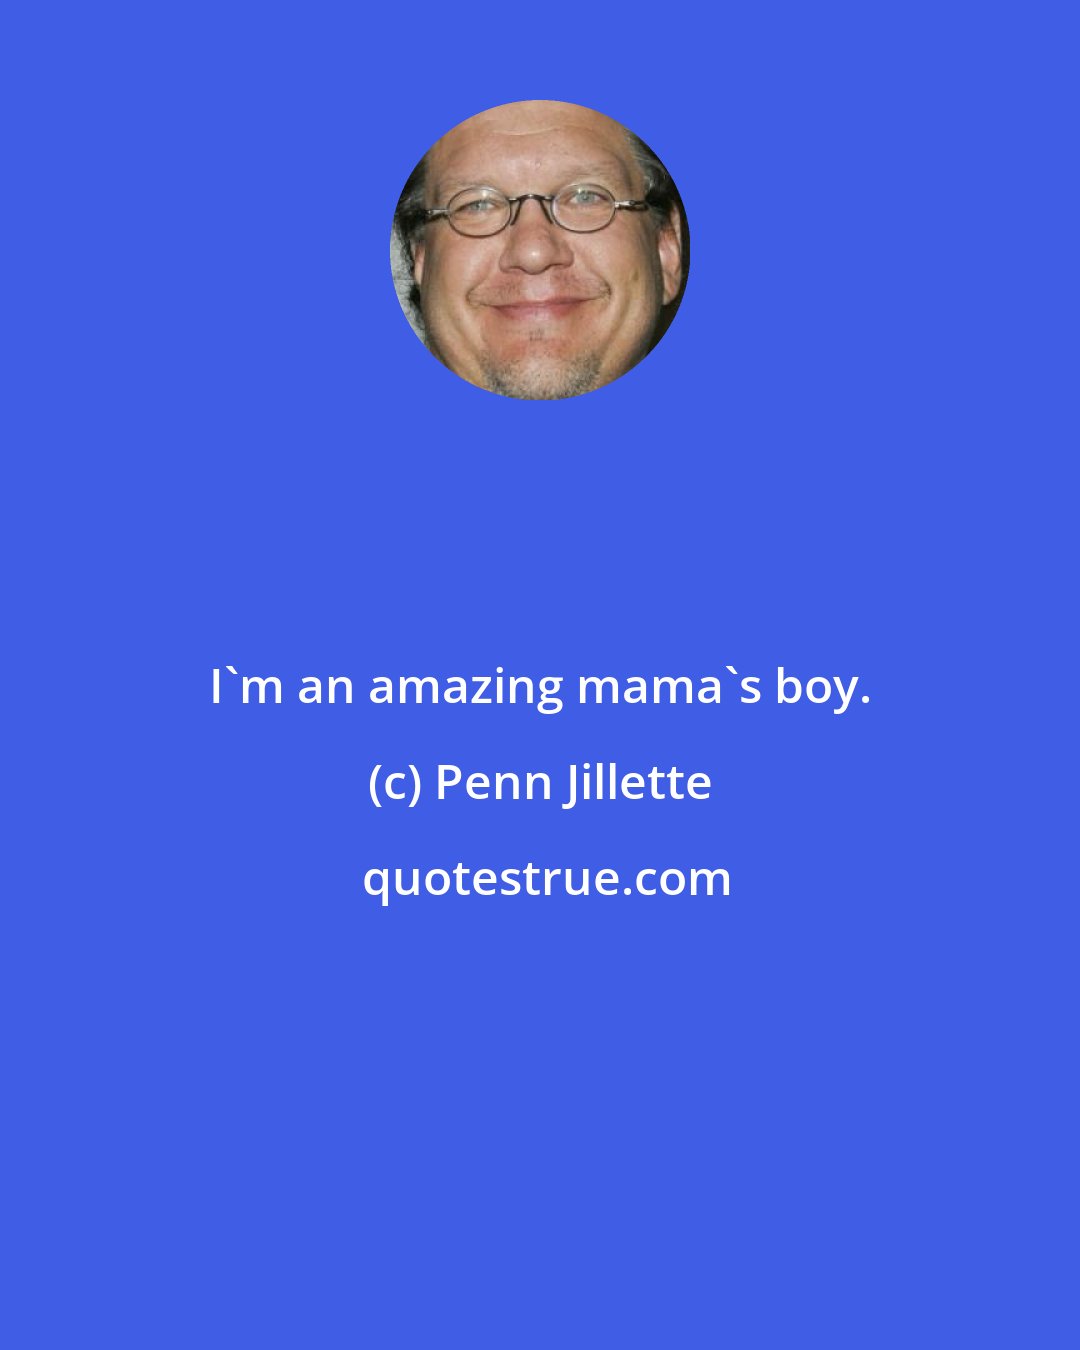 Penn Jillette: I'm an amazing mama's boy.